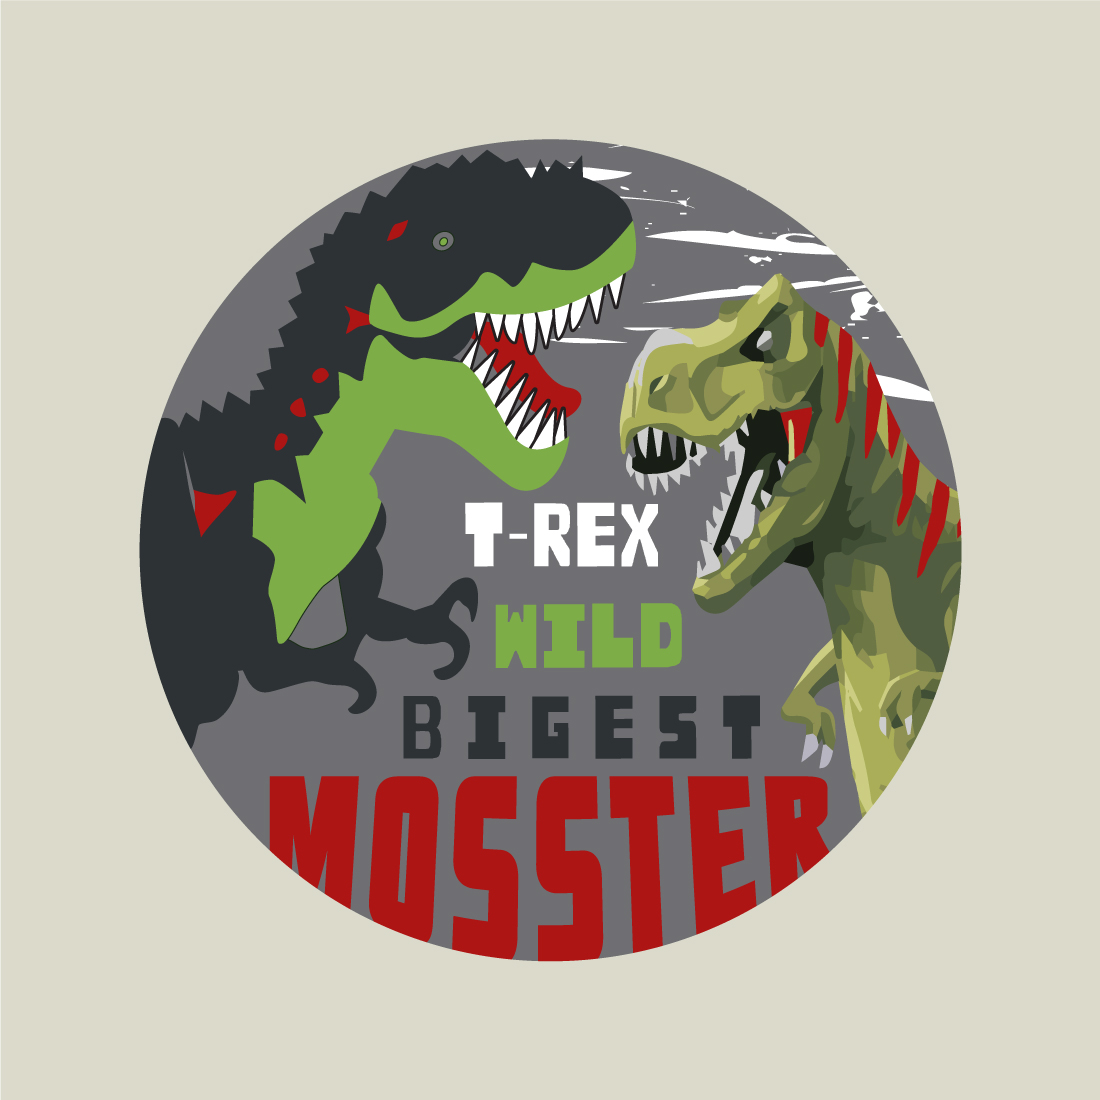 T-rezx Wild Biggest Monster t Shirt Design preview image.